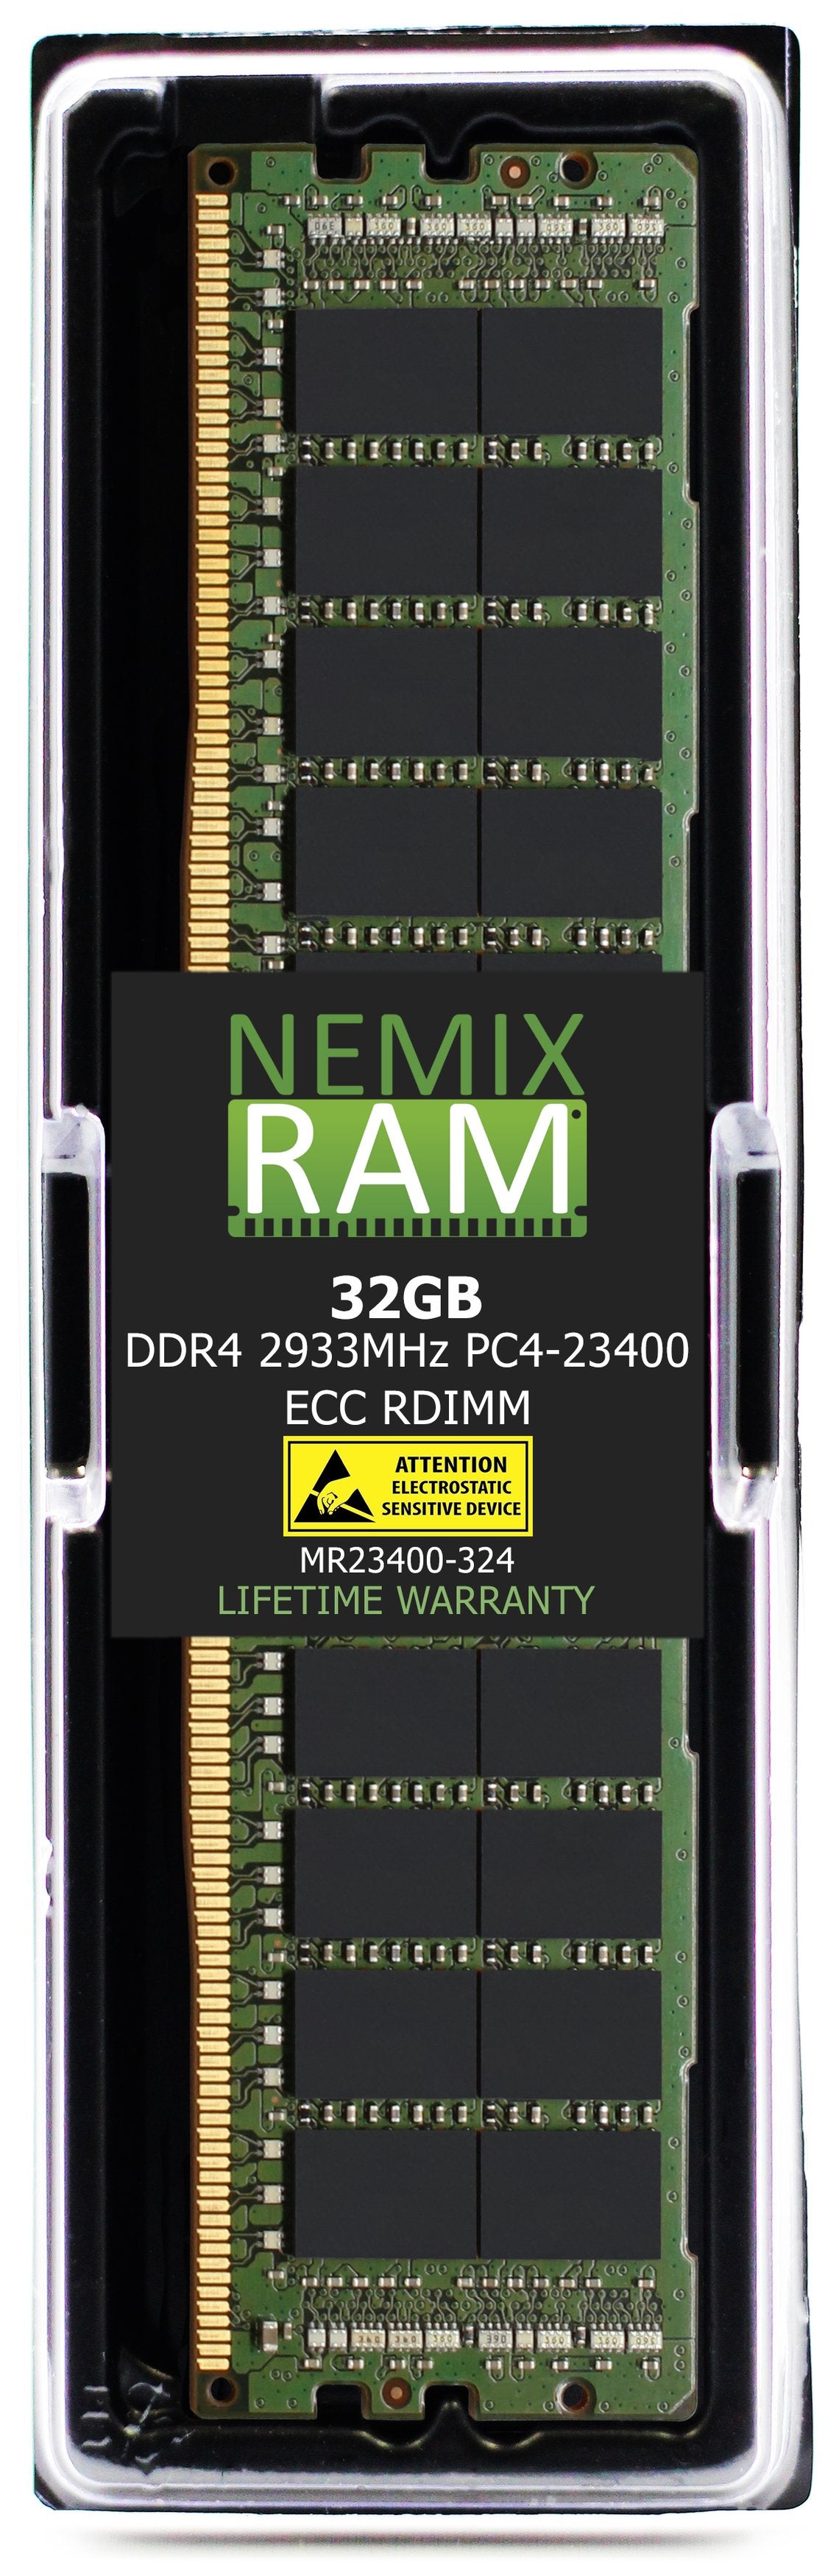 32GB DDR4 2933MHZ PC4-23400 RDIMM Compatible with Supermicro MEM-DR432L-HL02-ER29